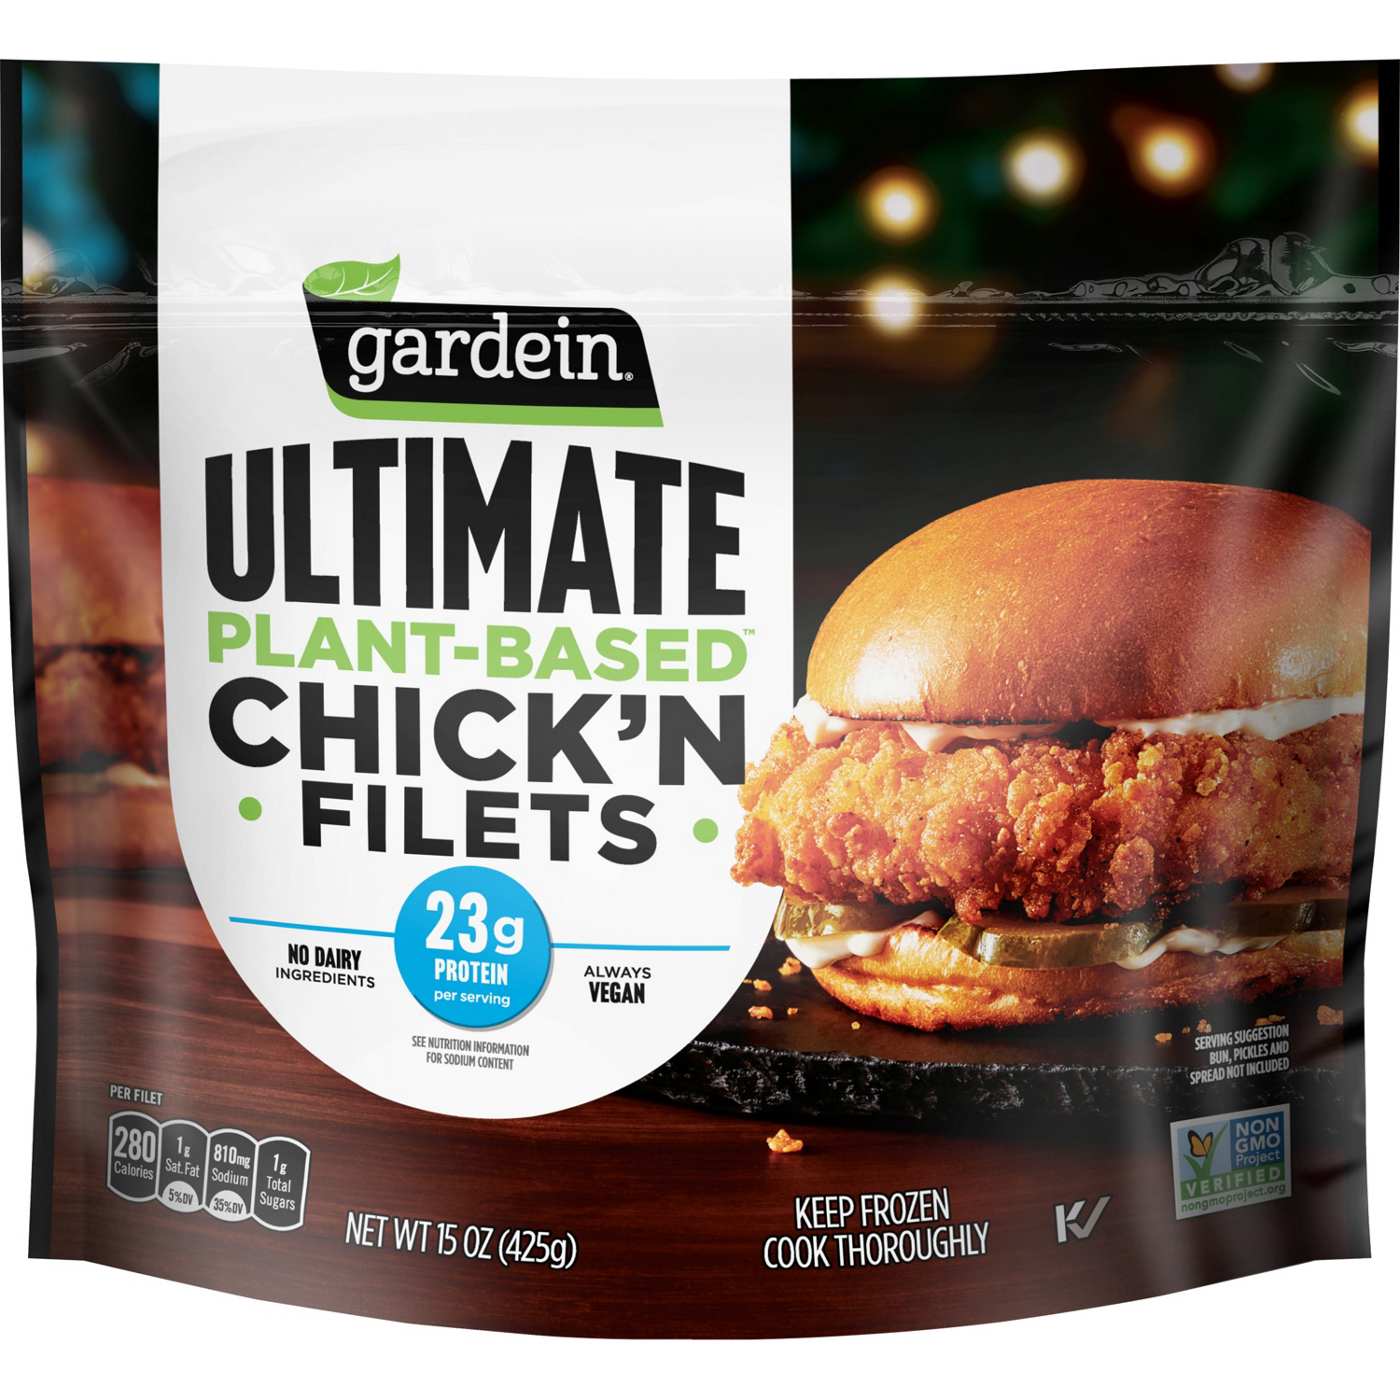 Gardein Ultimate Plant-Based Vegan Chick'n Filets; image 1 of 7